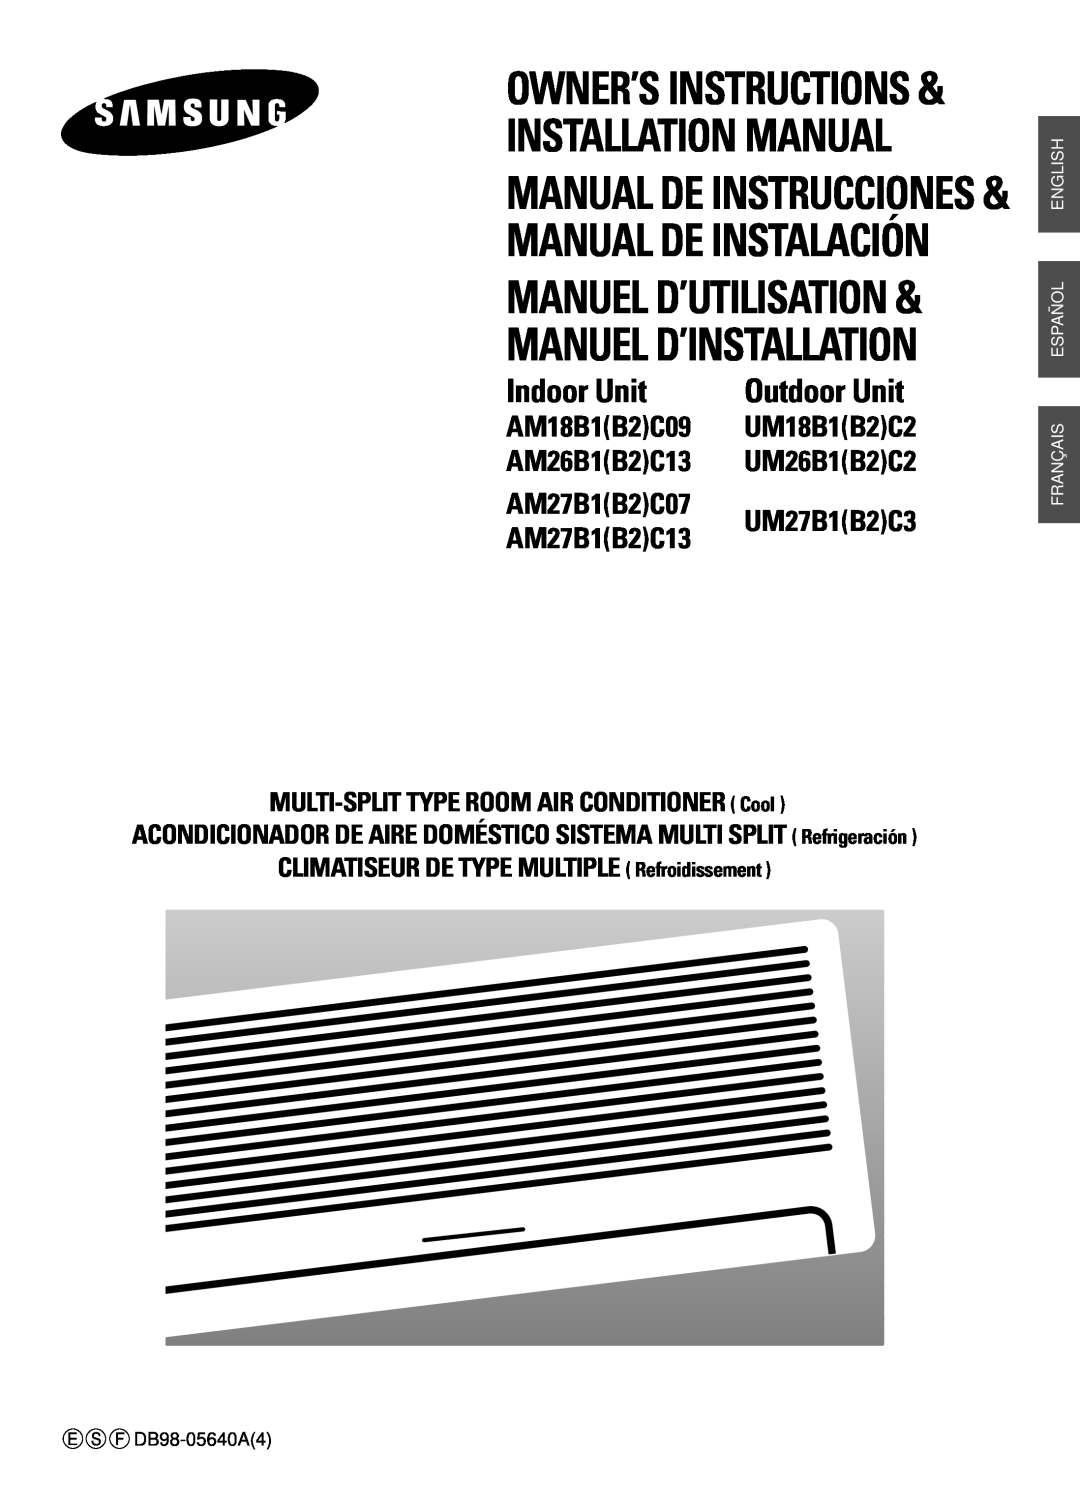 Samsung AM27B1(B2)C13 installation manual Installation Manual Manual De Instrucciones, Owner’S Instructions, Indoor Unit 